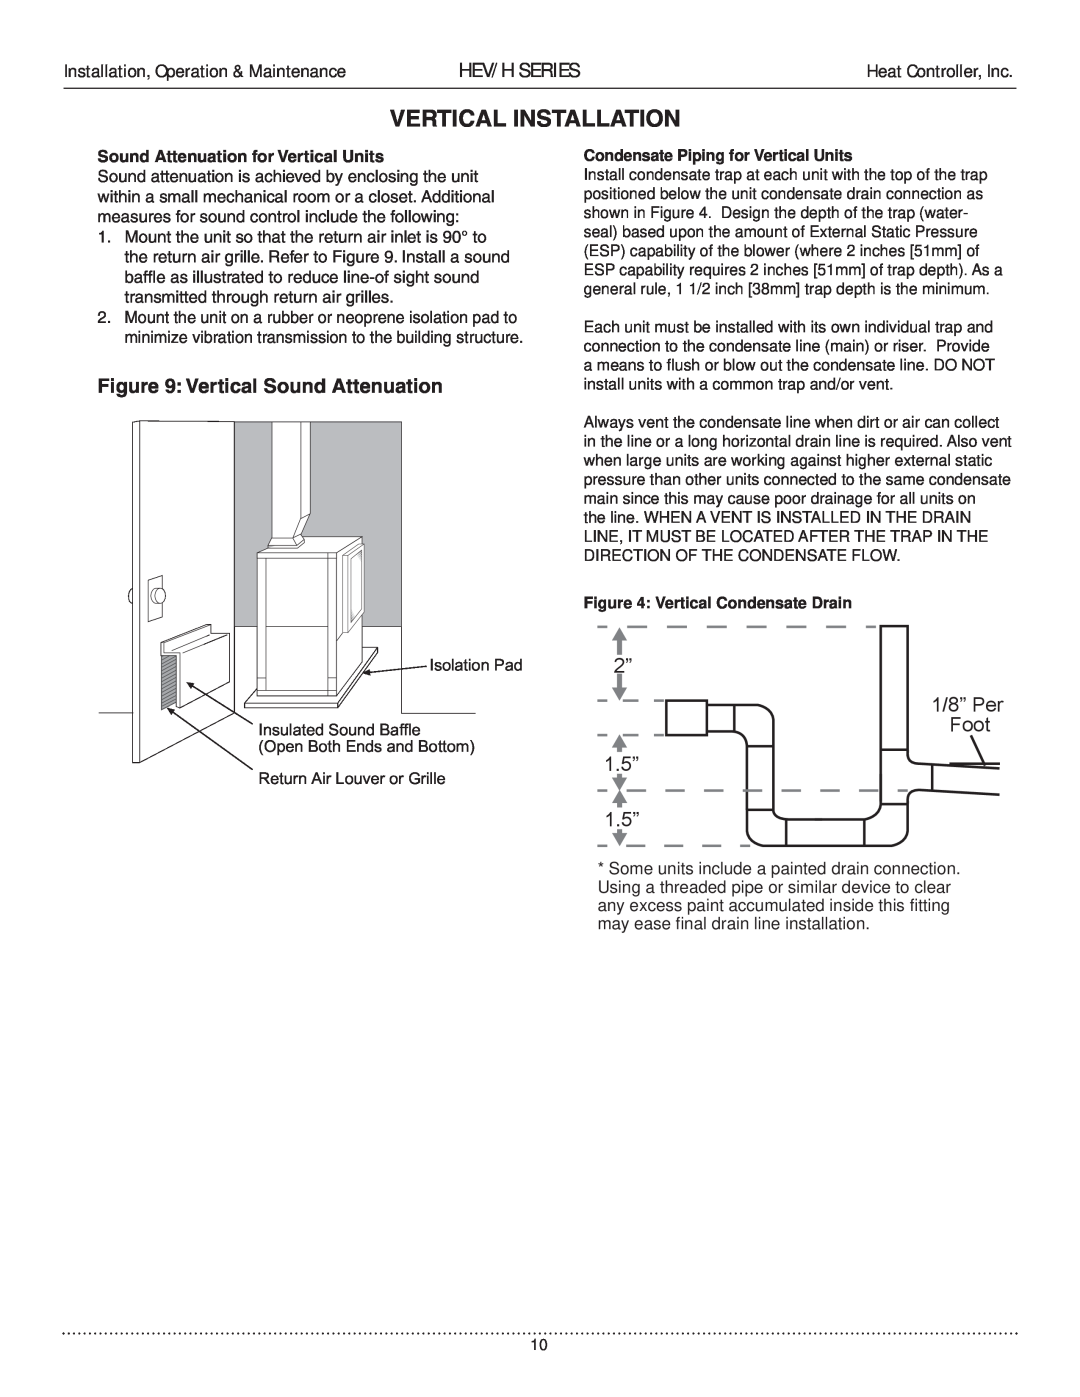 Heat Controller HEV/H manual Vertical Installation, Hev/H Series, Vertical Sound Attenuation, ರ ರ3HU RRW ರ ರ 